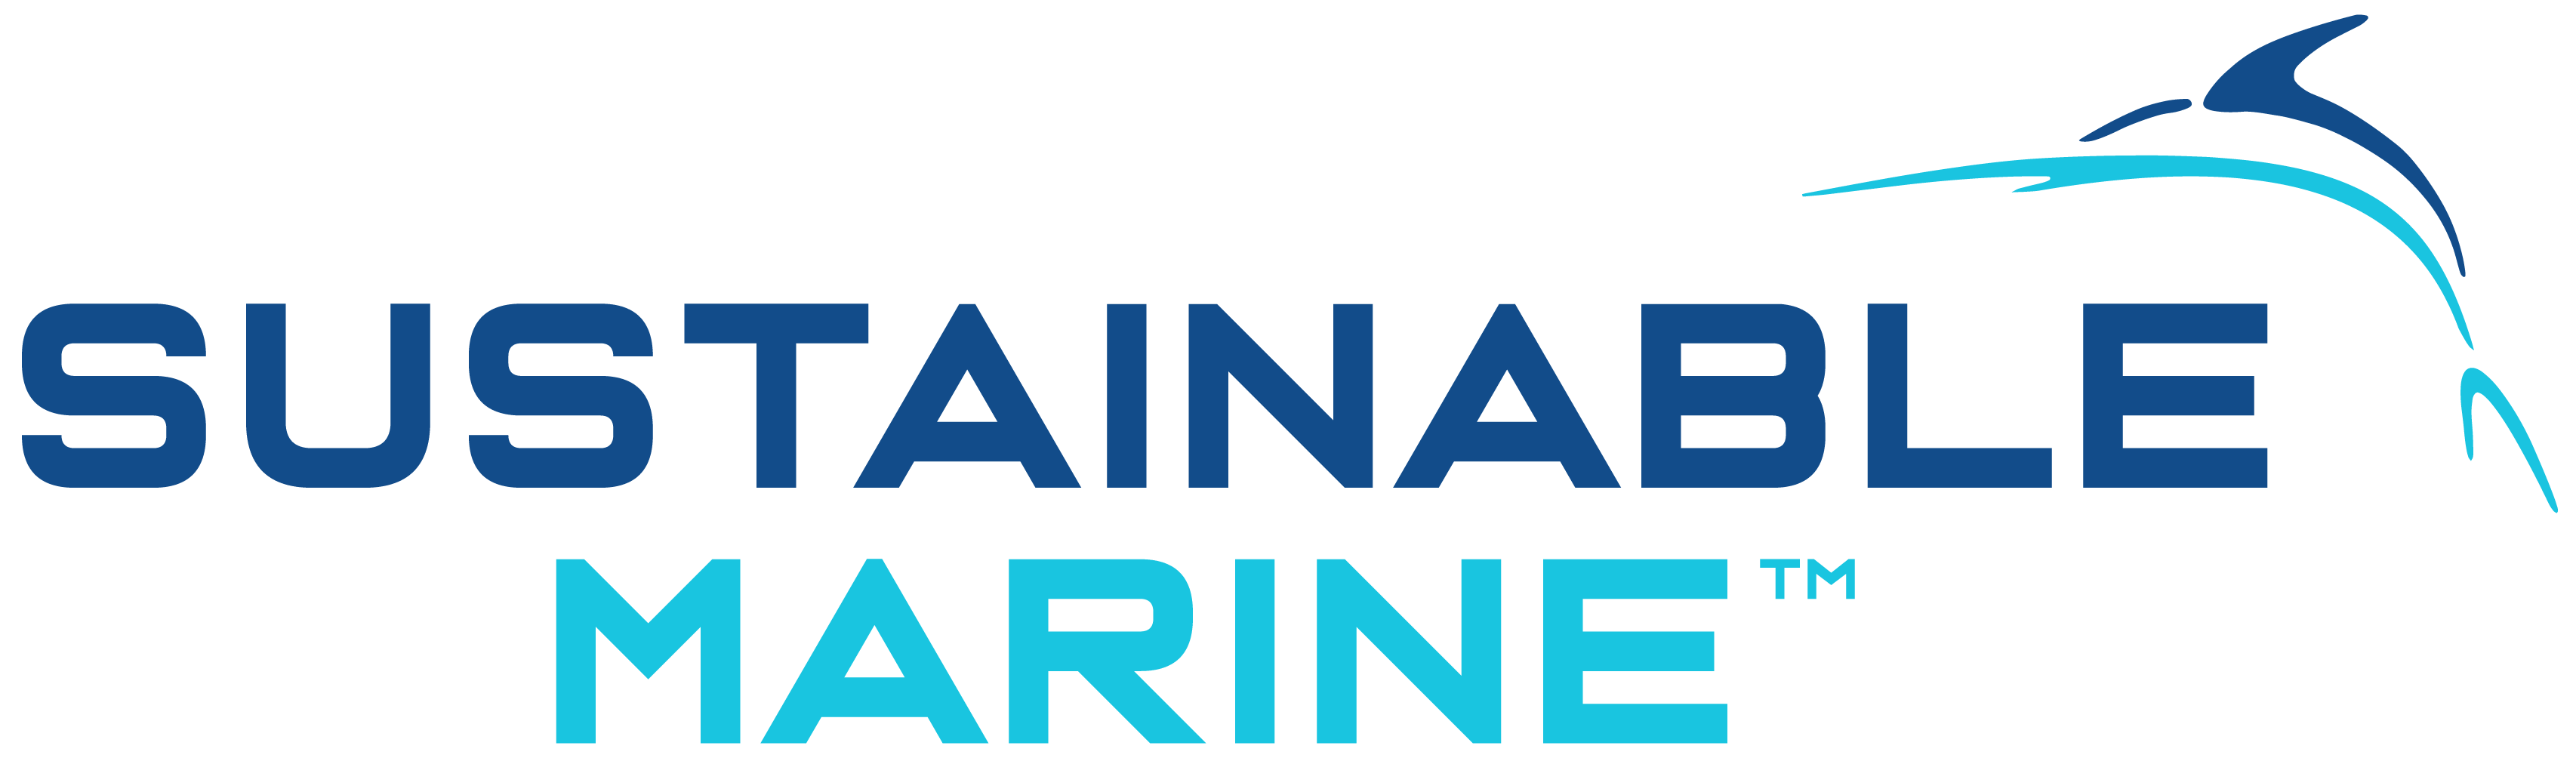 Sustainable Marine